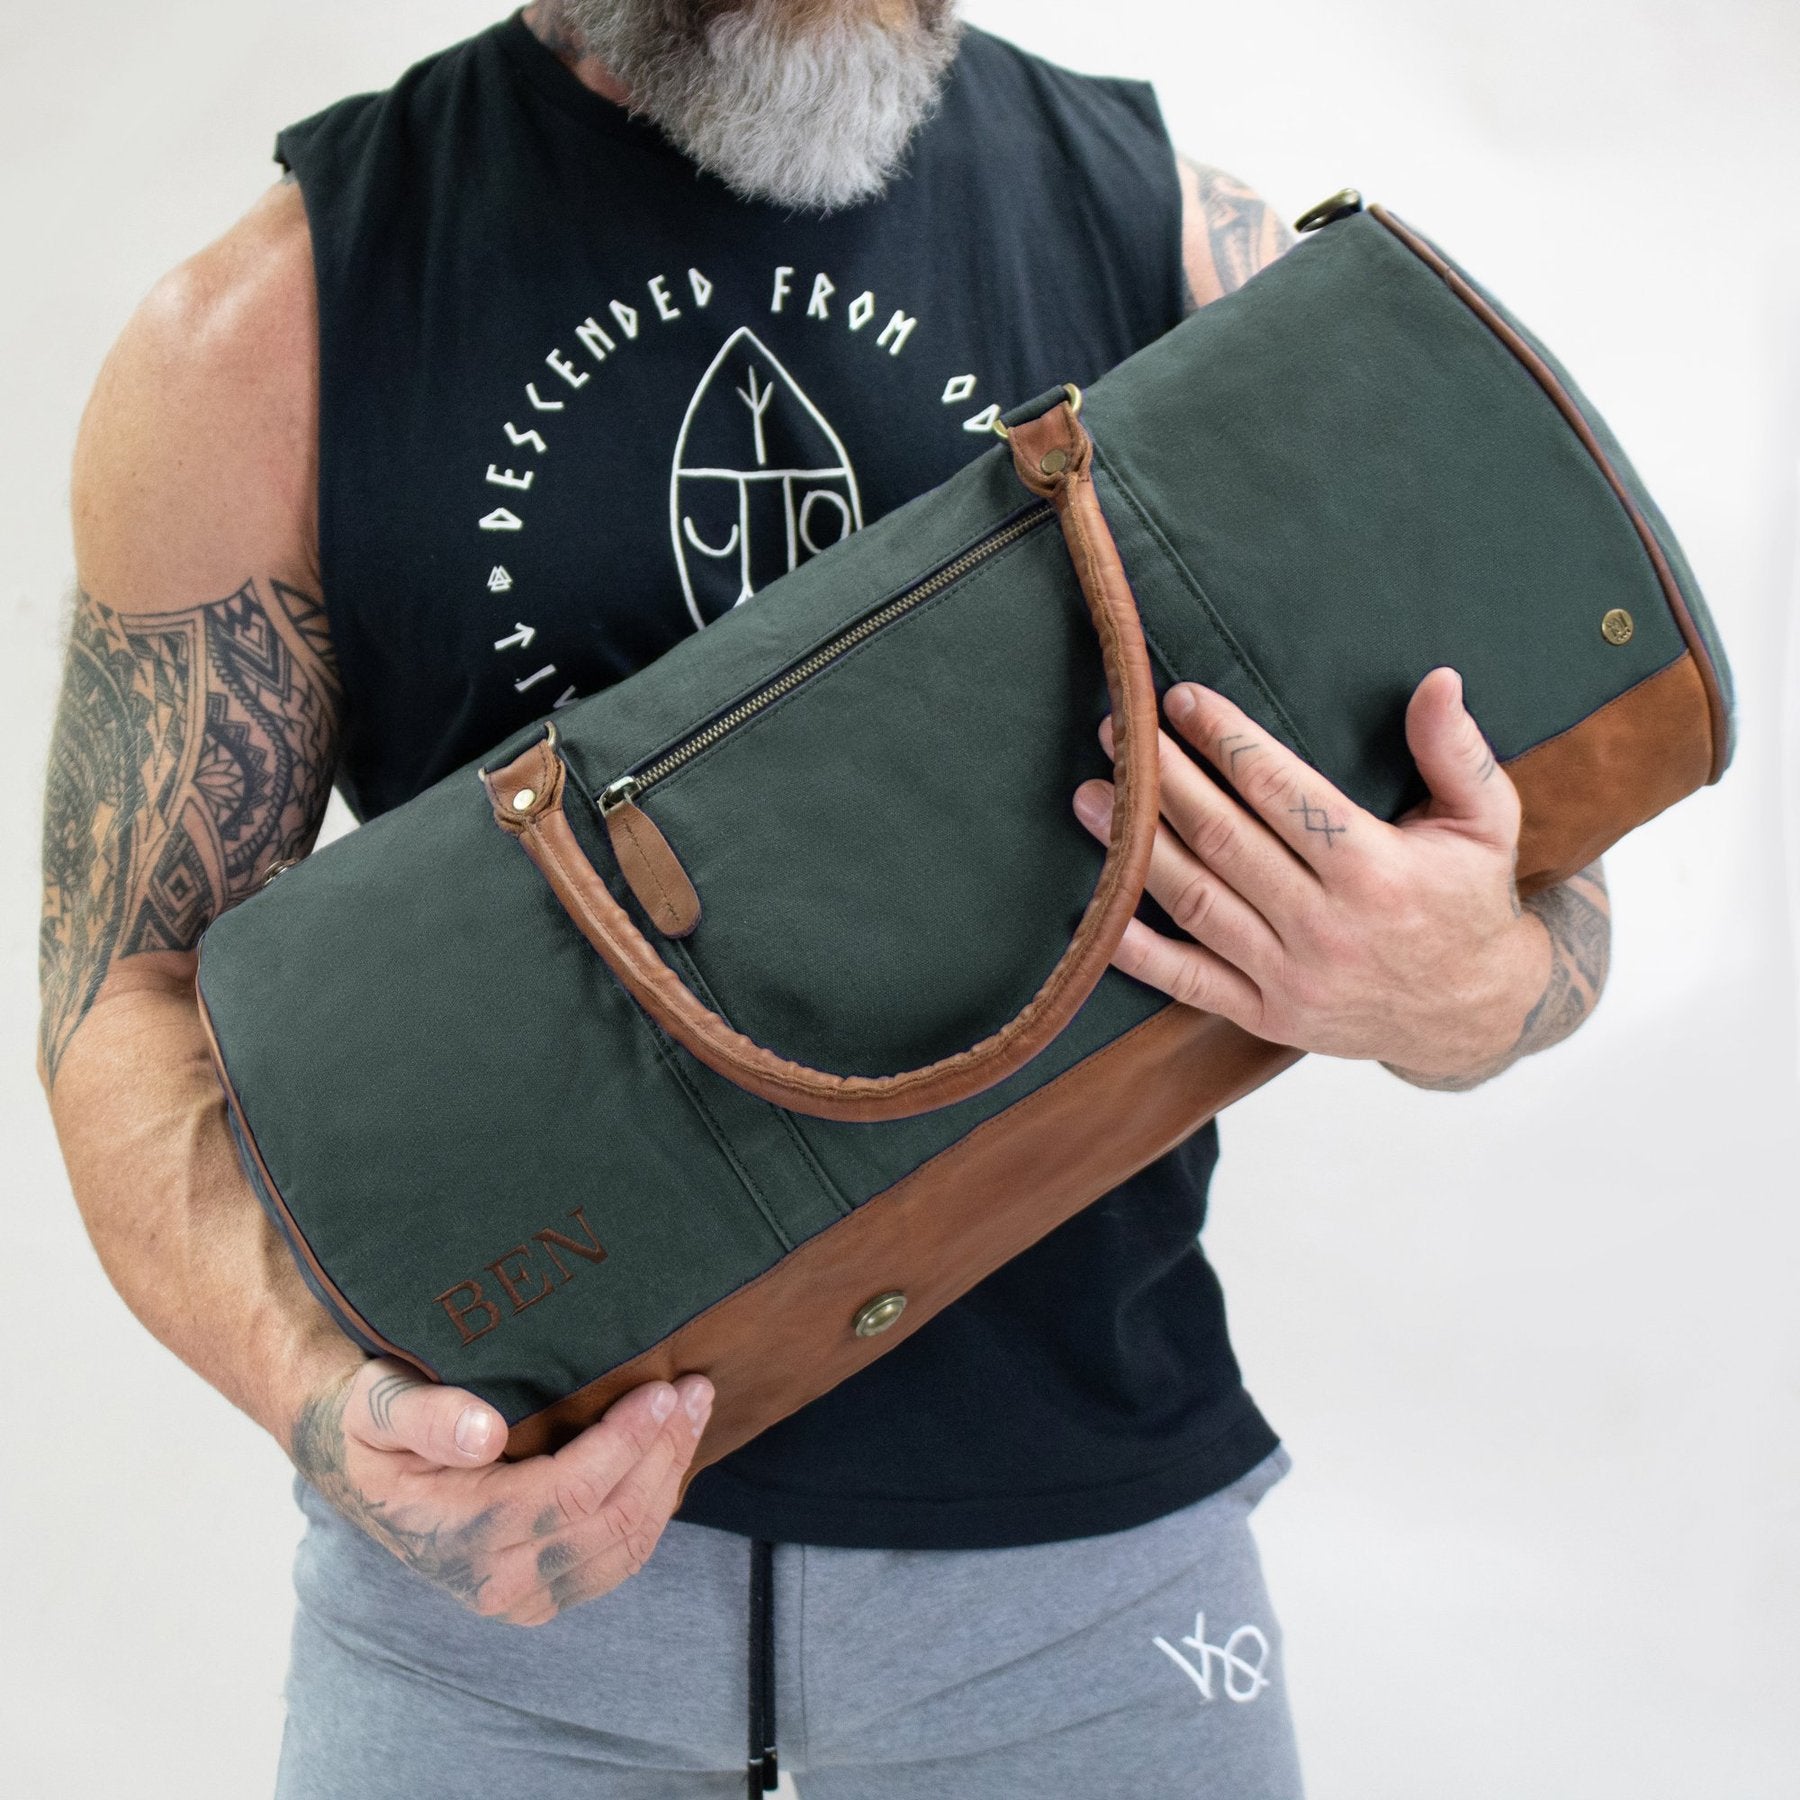 Monogram Leather Duffle - Personalized Duffle Bag - Barrel Bag - Mens &  Women's - Handmade Overnight Bag in Brown, Black or 2-Tone